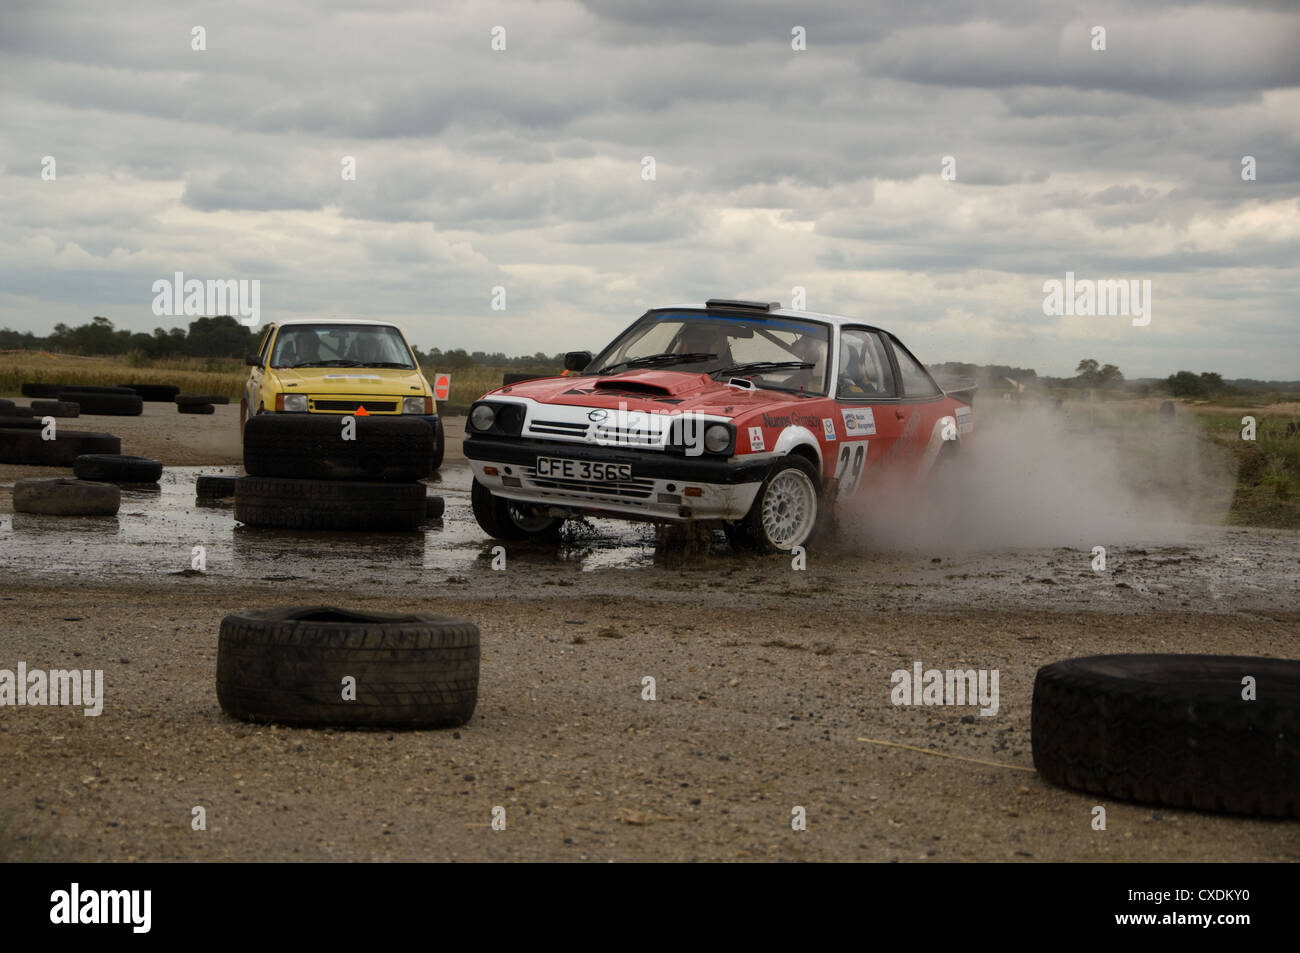 Opel Manta e Vauxhall Nova auto da rally Foto Stock